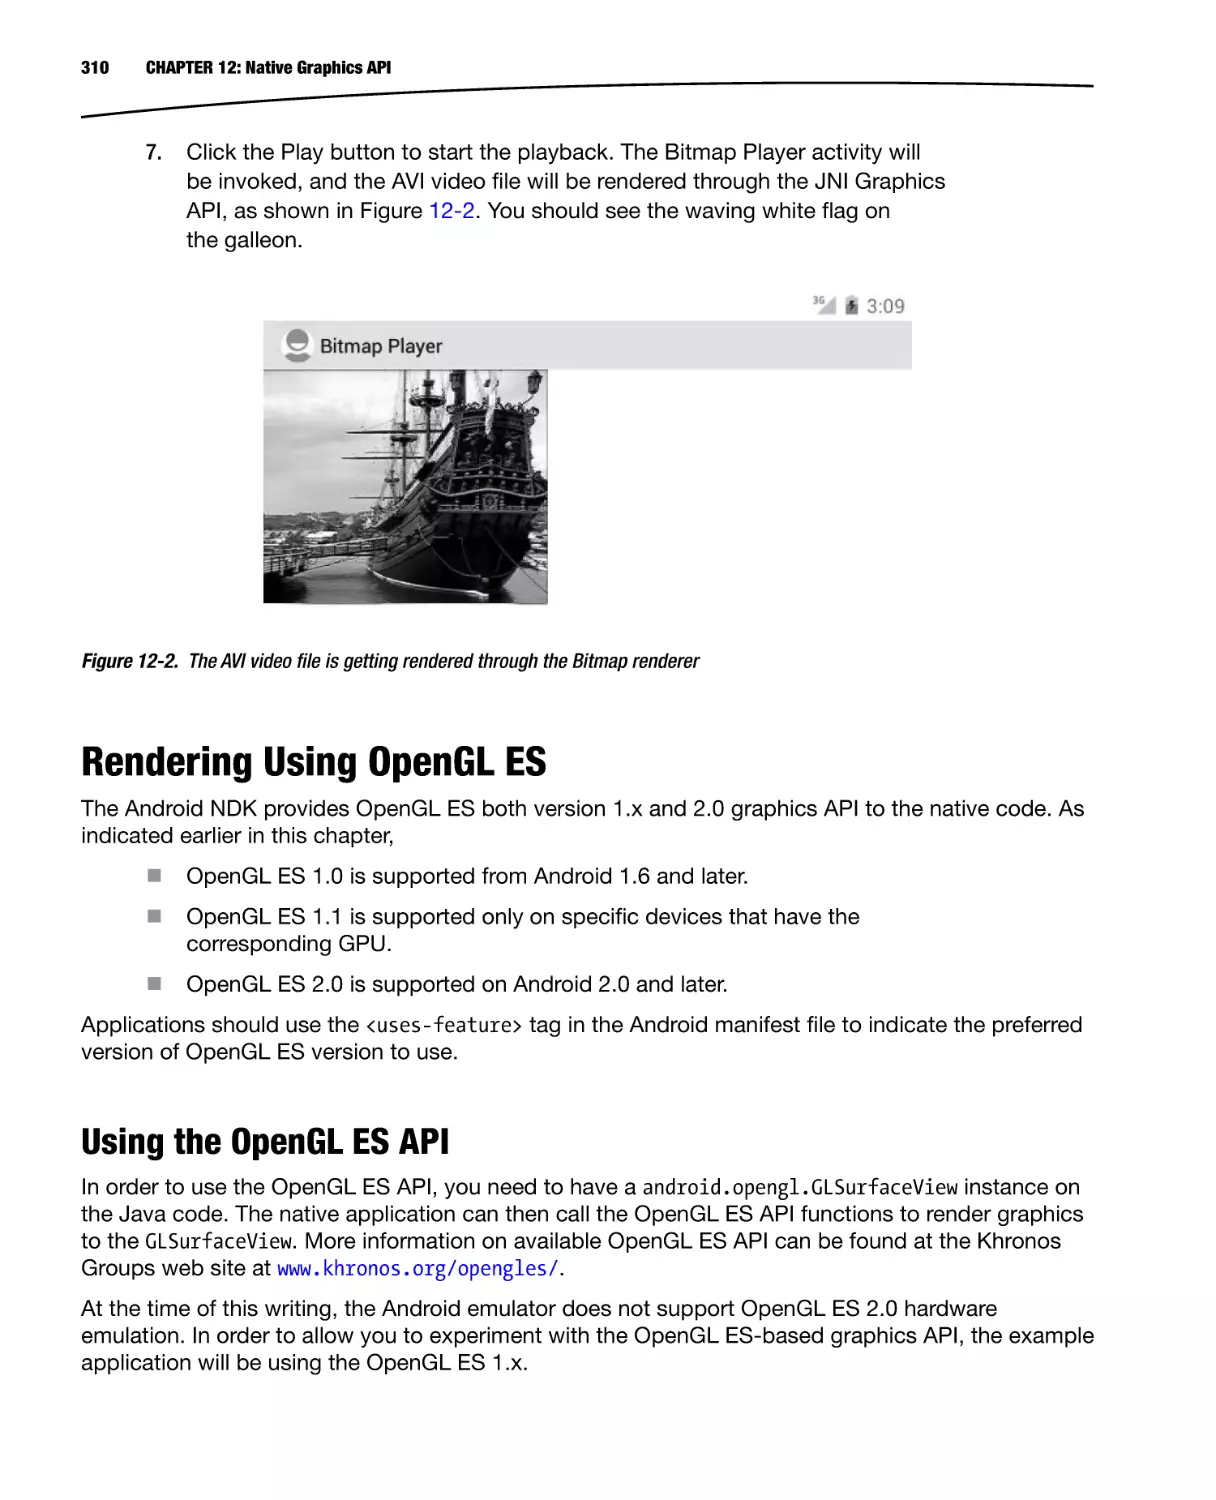 Rendering Using OpenGL ES
Using the OpenGL ES API